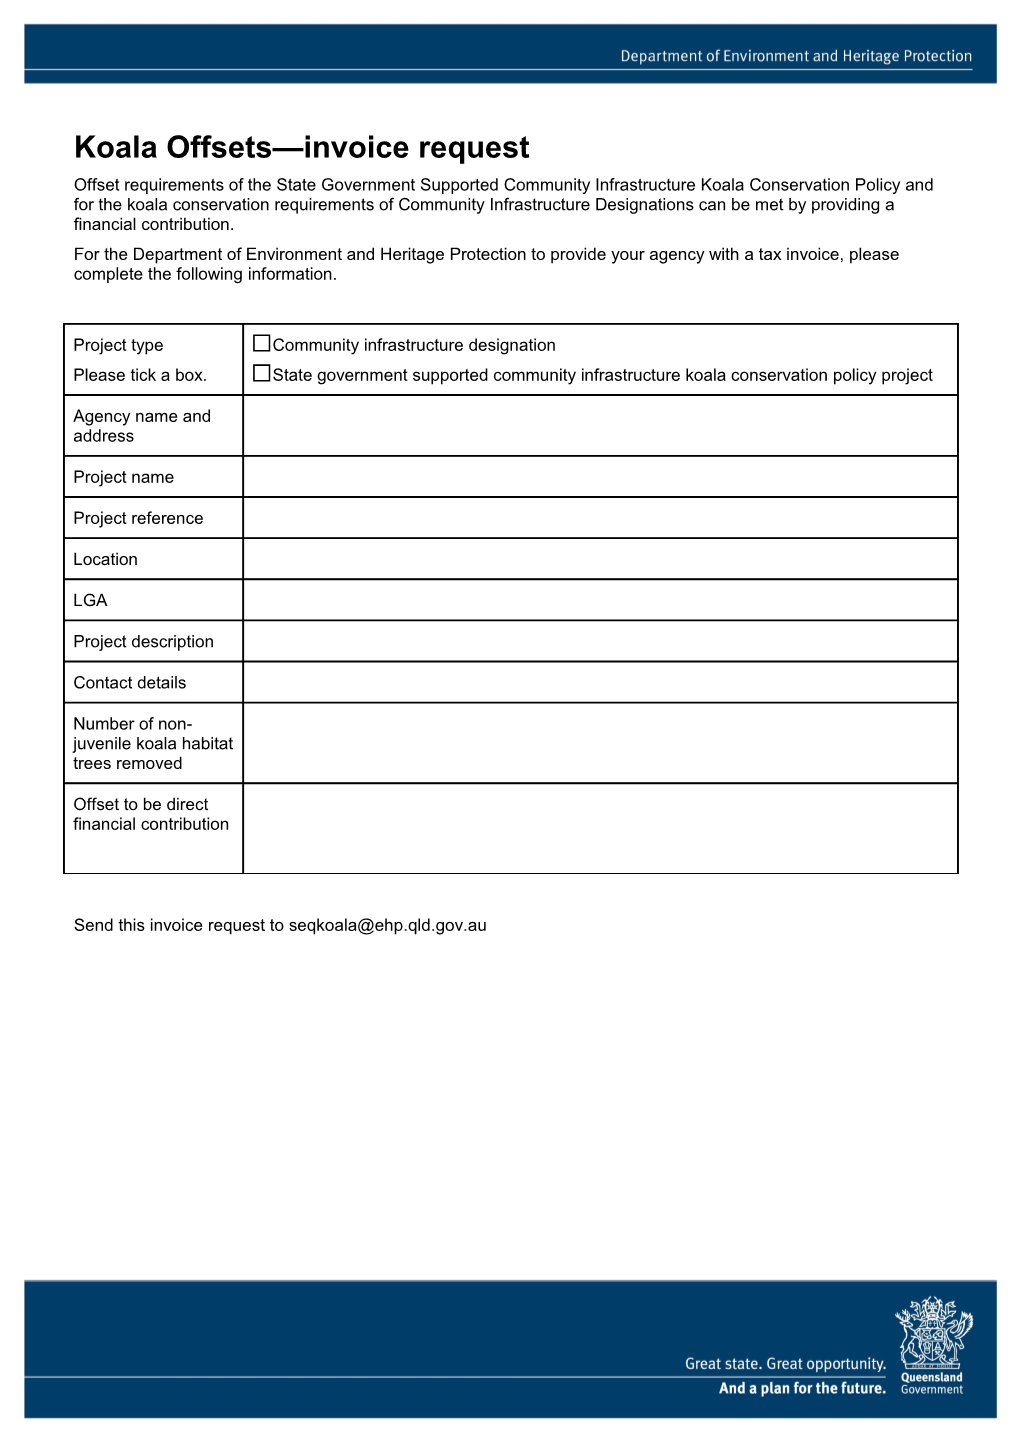 Koala Offset Invoice Request Form